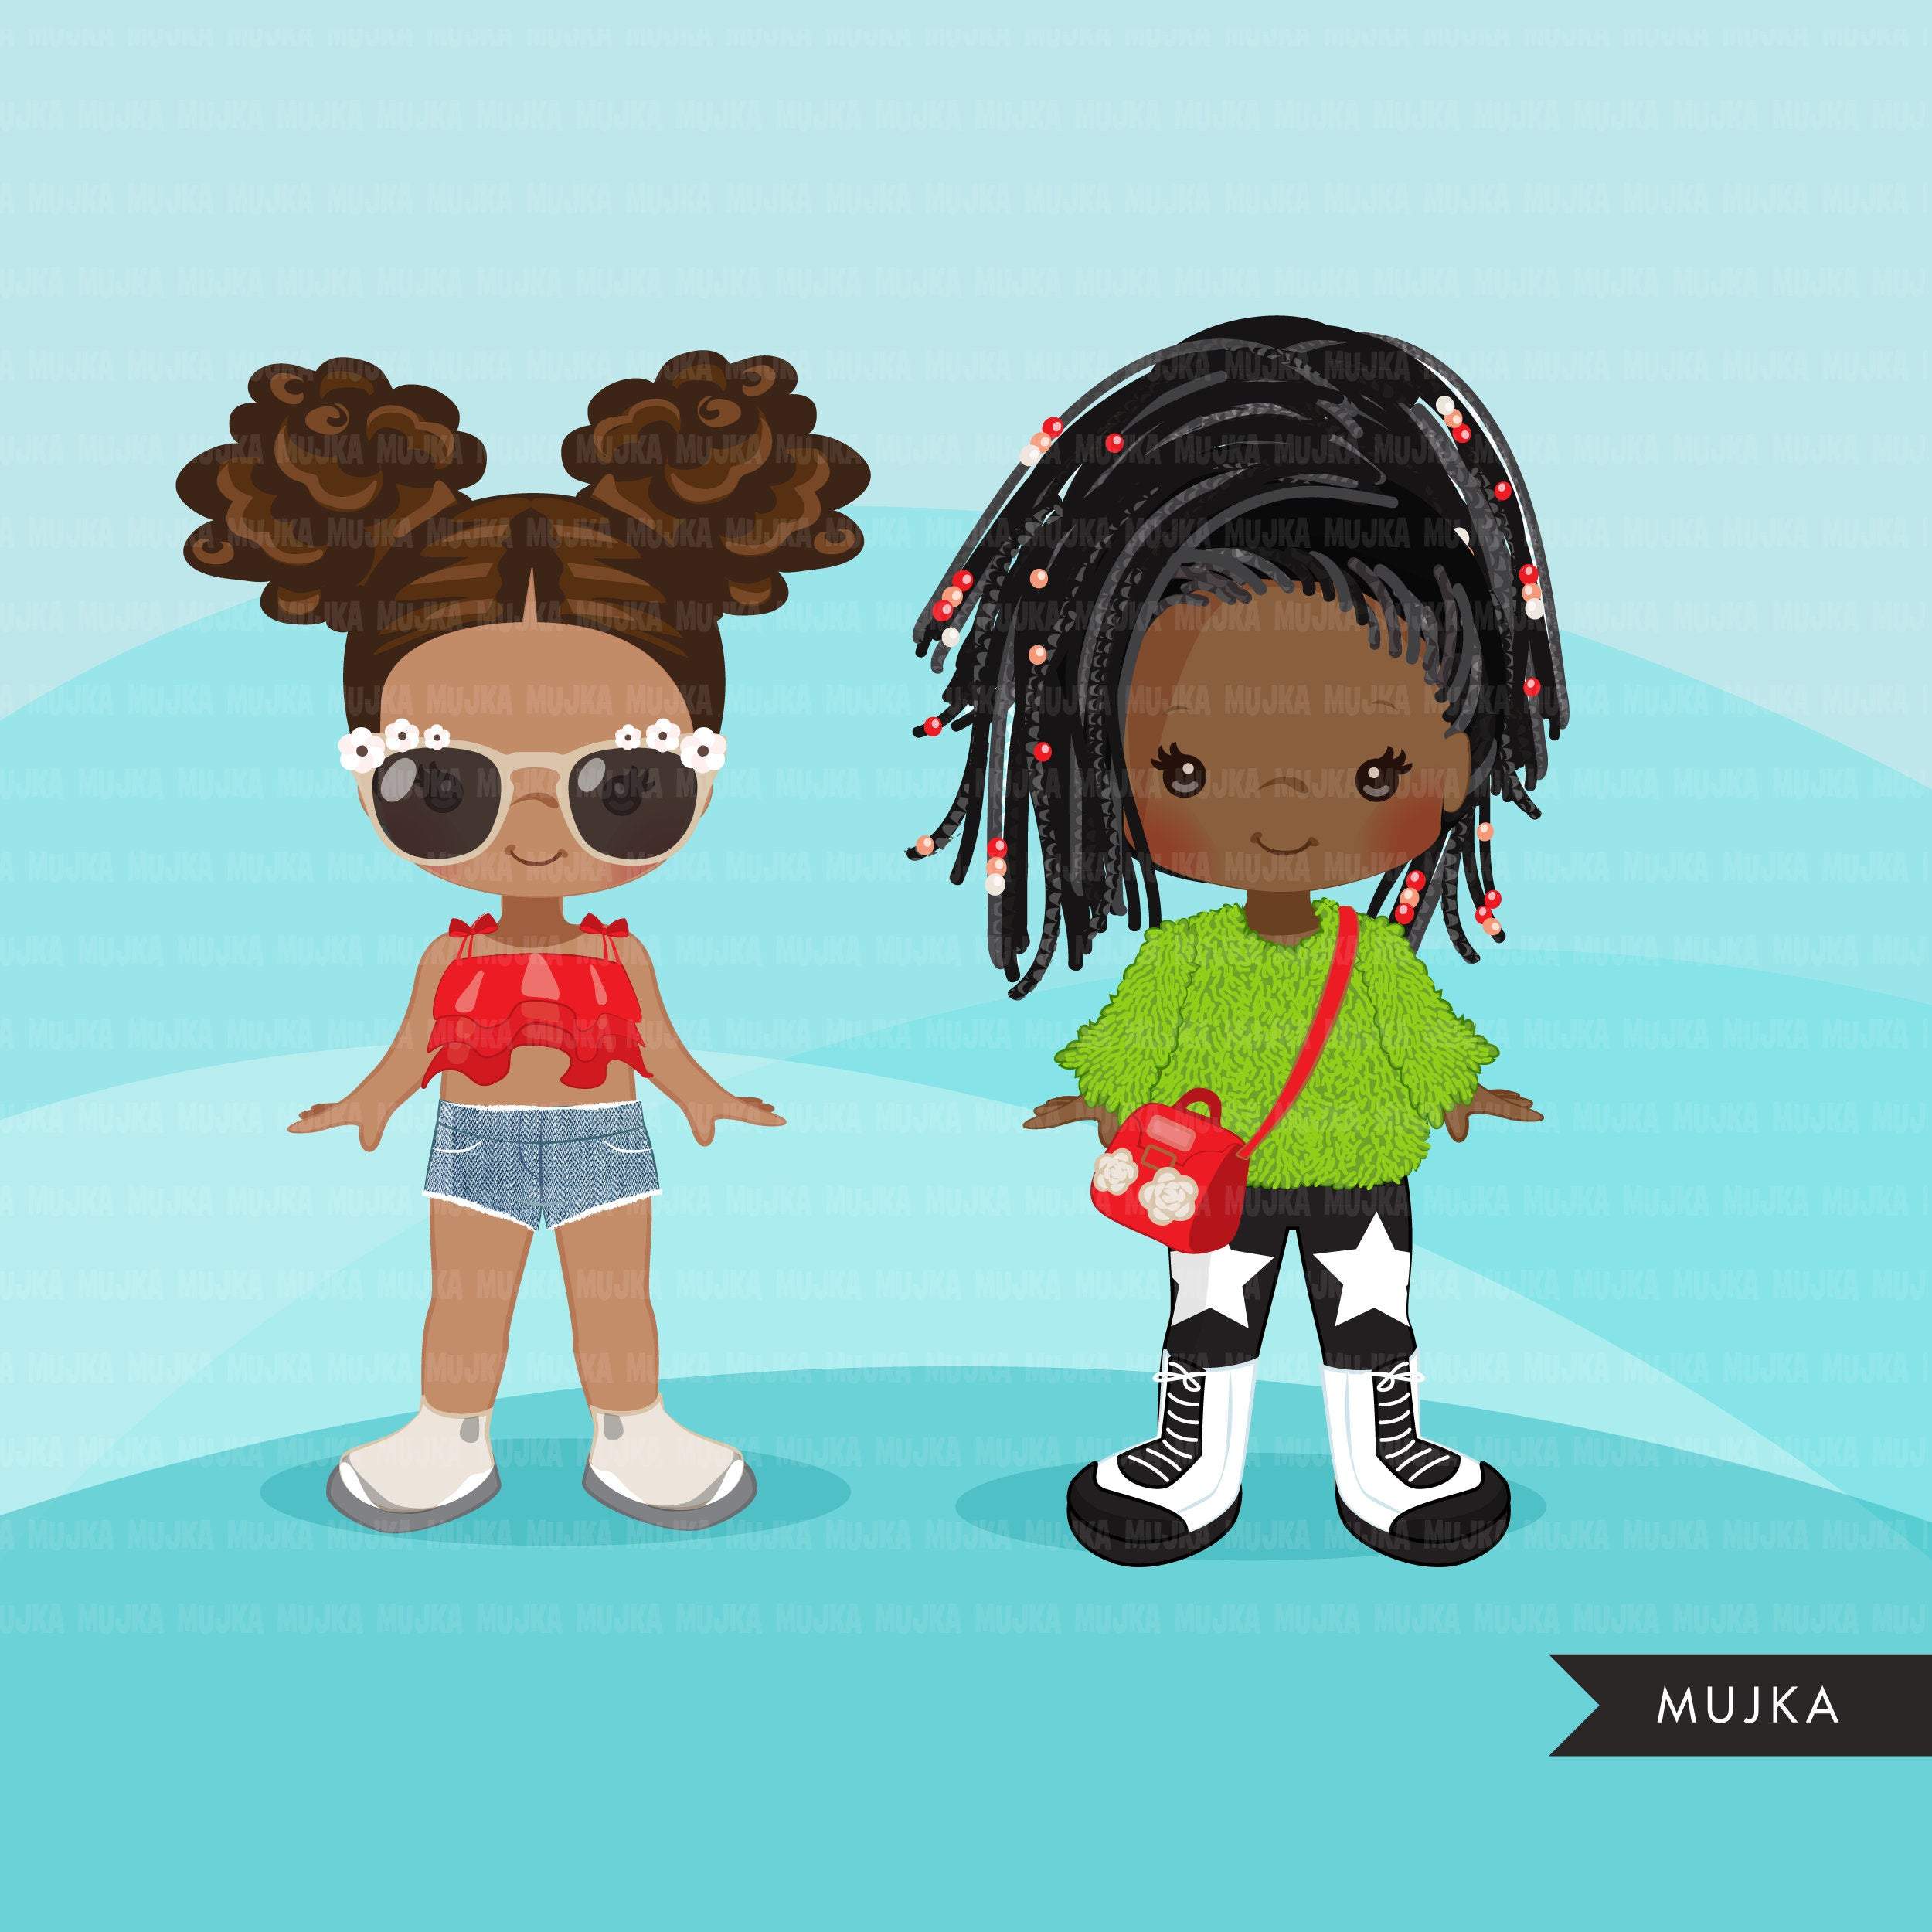 black girl cartoon character clip art